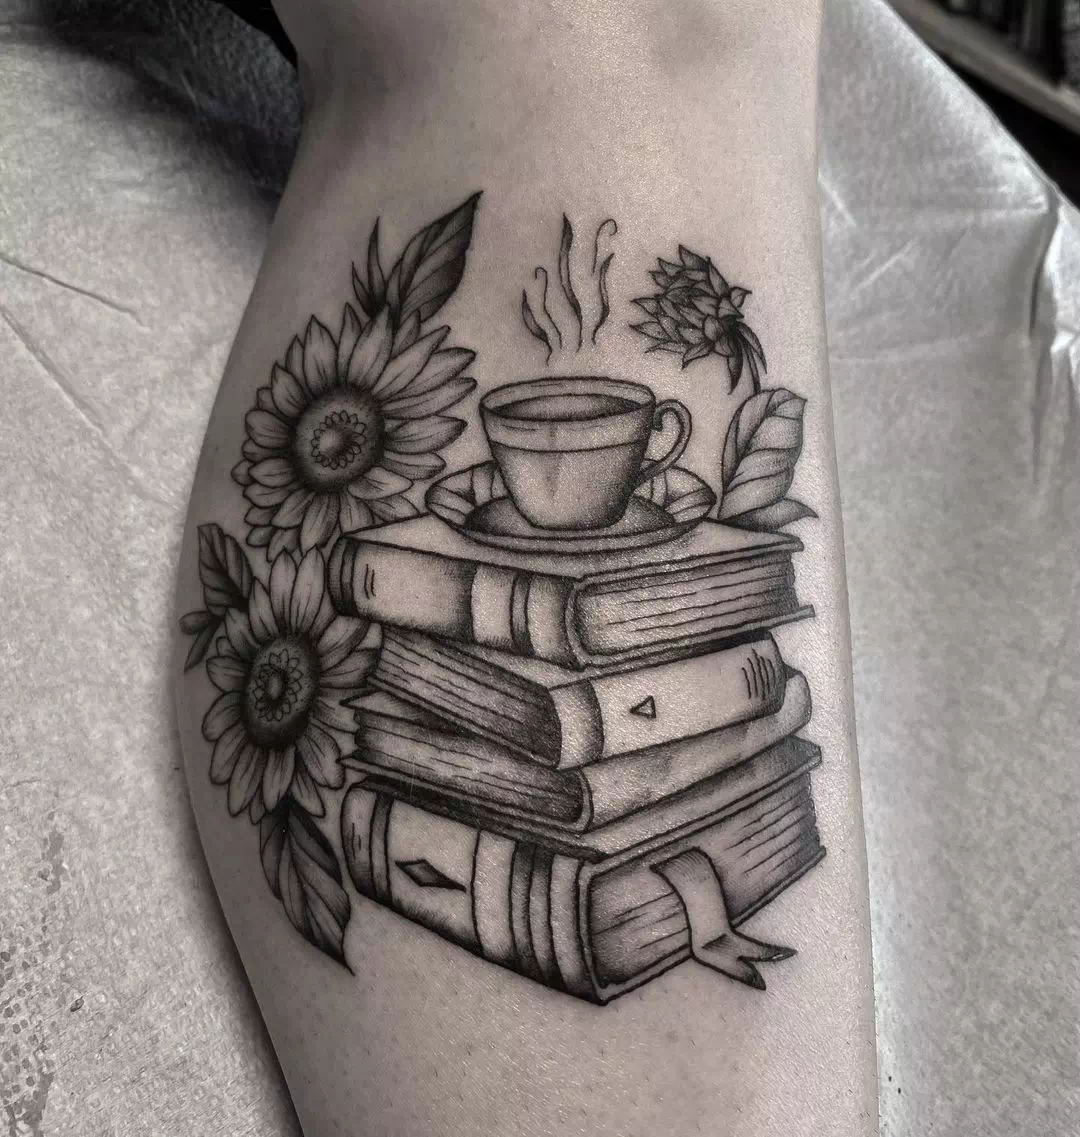 Book and coffee sunflowers